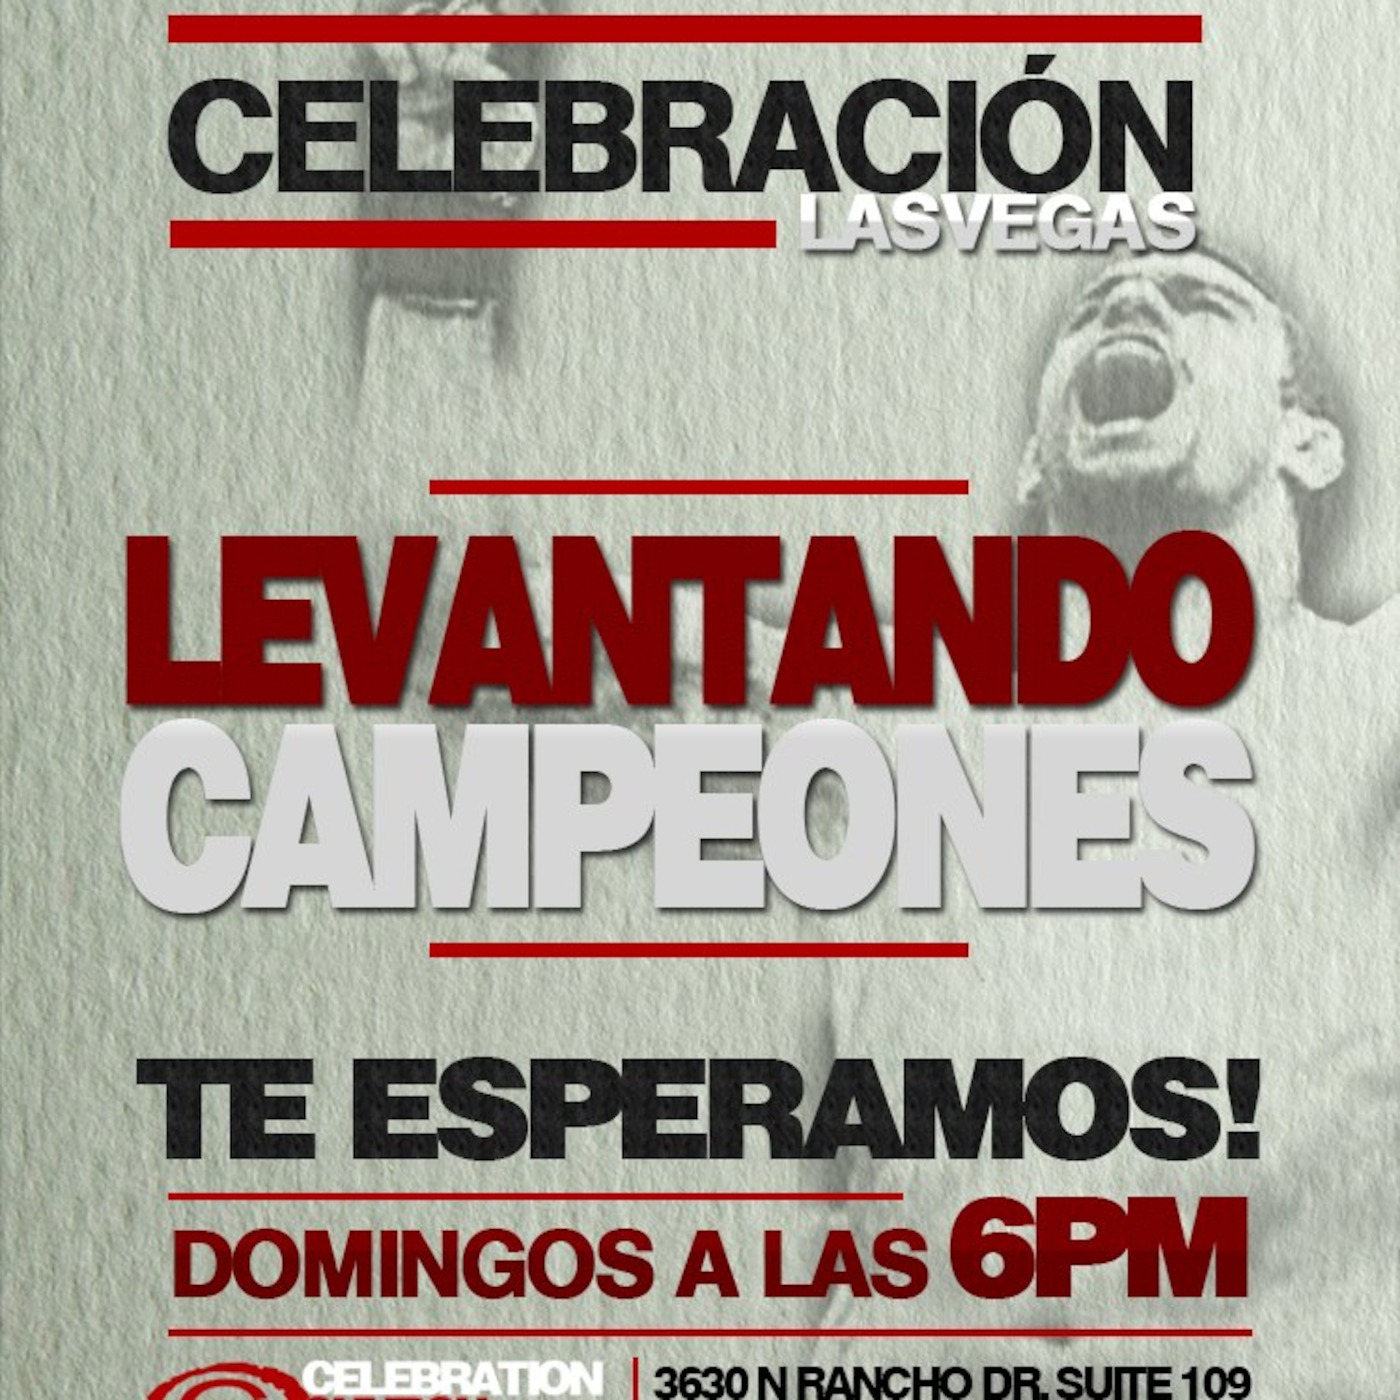 Celebracion Las Vegas (Spanish service of Celebration Las Vegas)